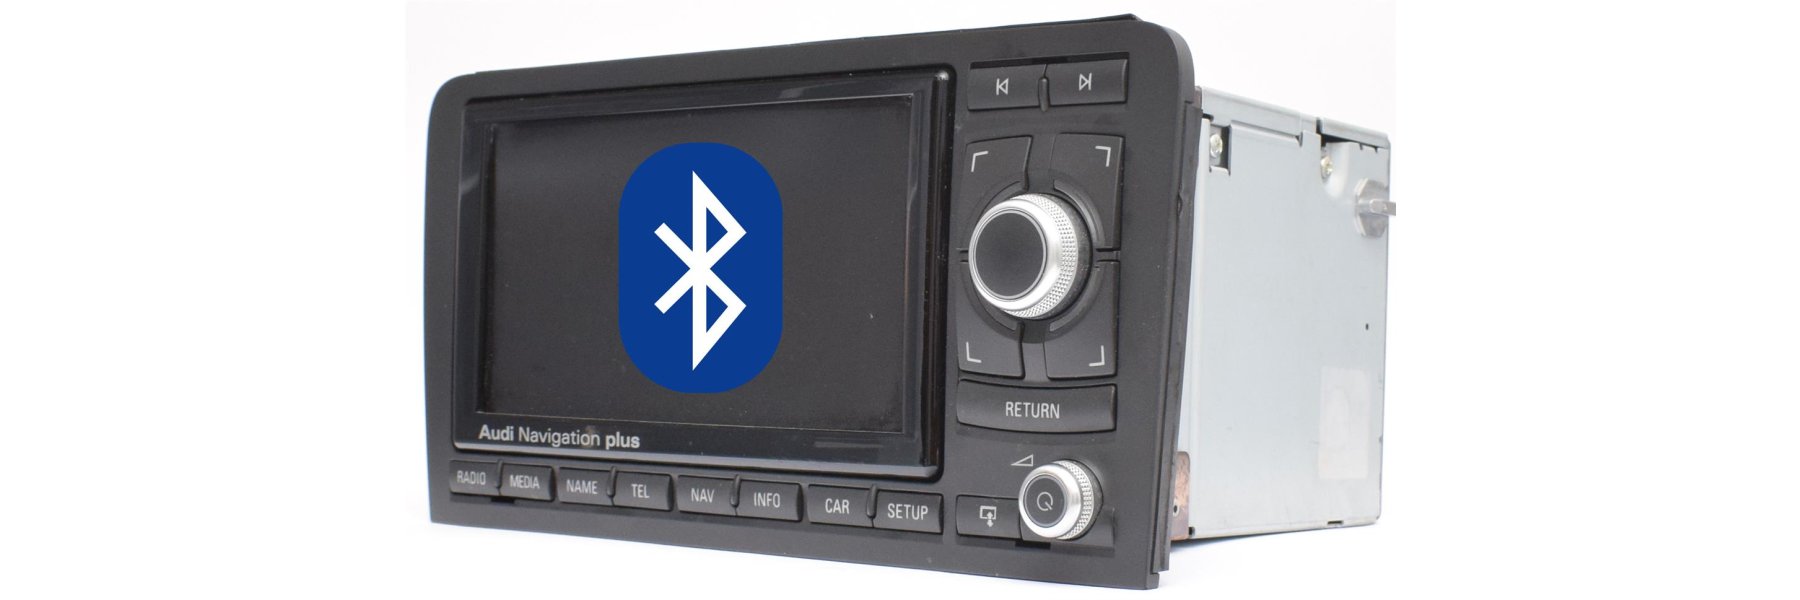 Bluetooth für Autoradio Audi Symphony 2 und vieles mehr